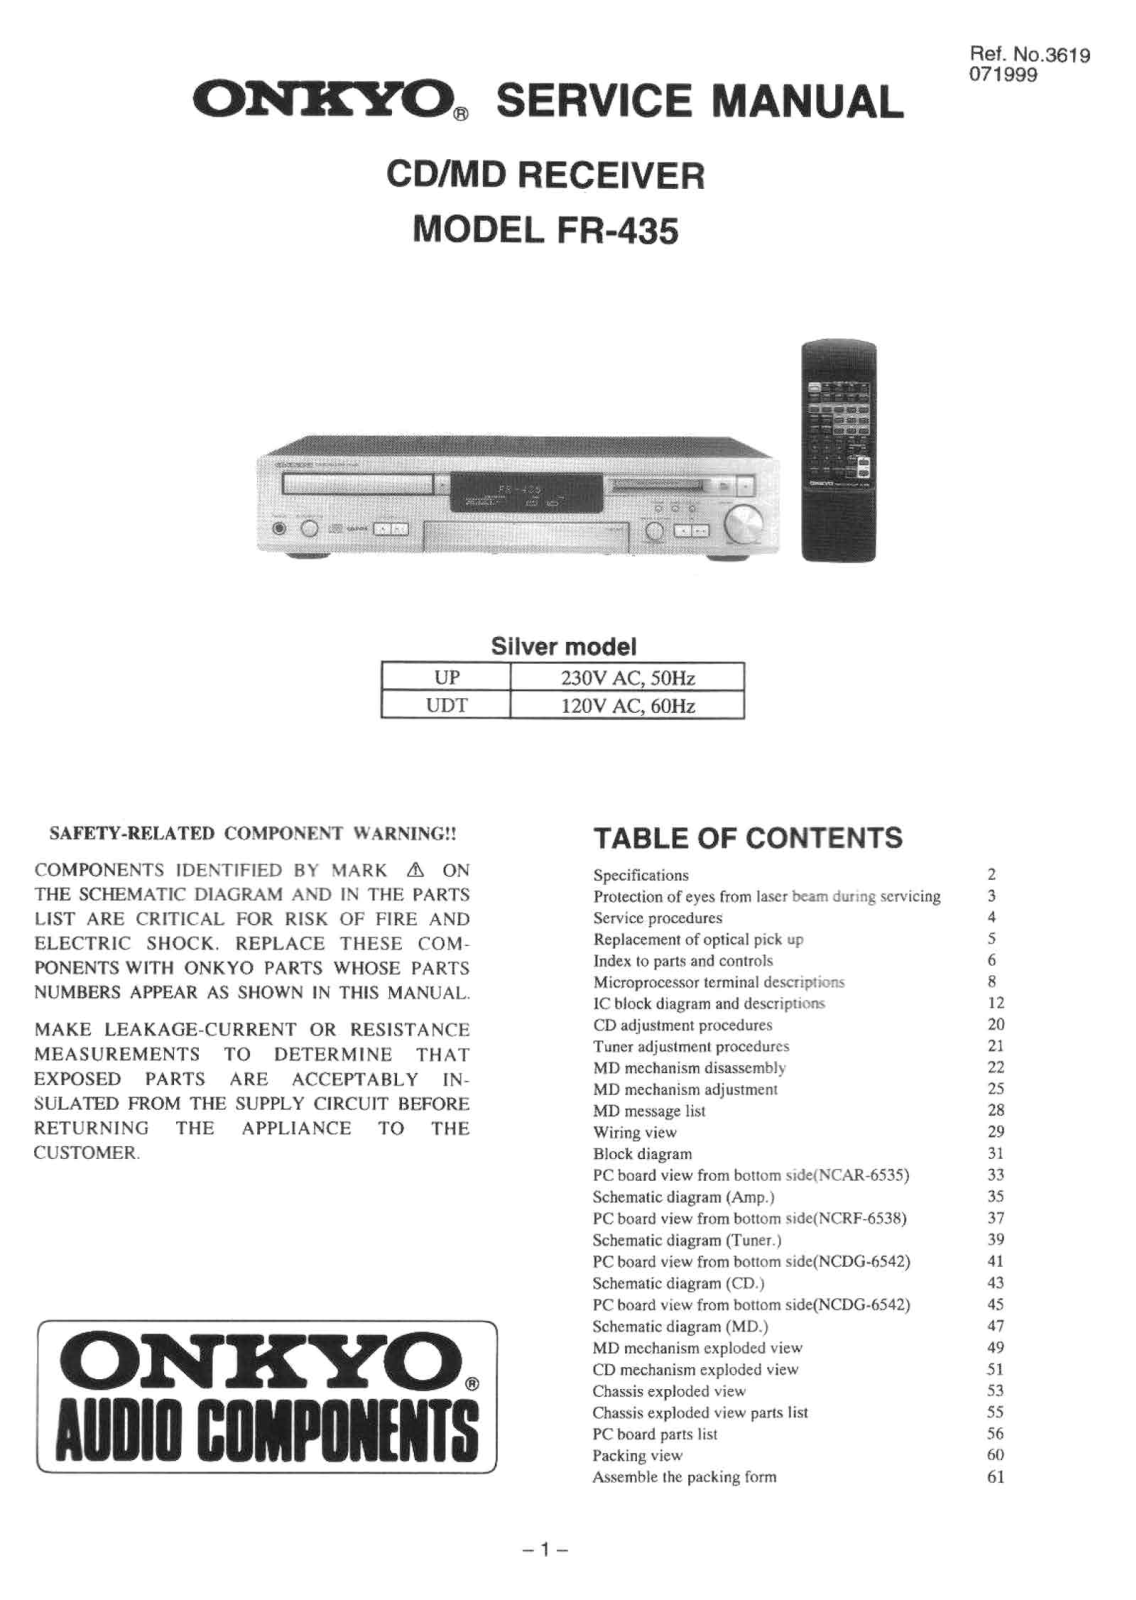 Onkyo FR-435 Service Manual